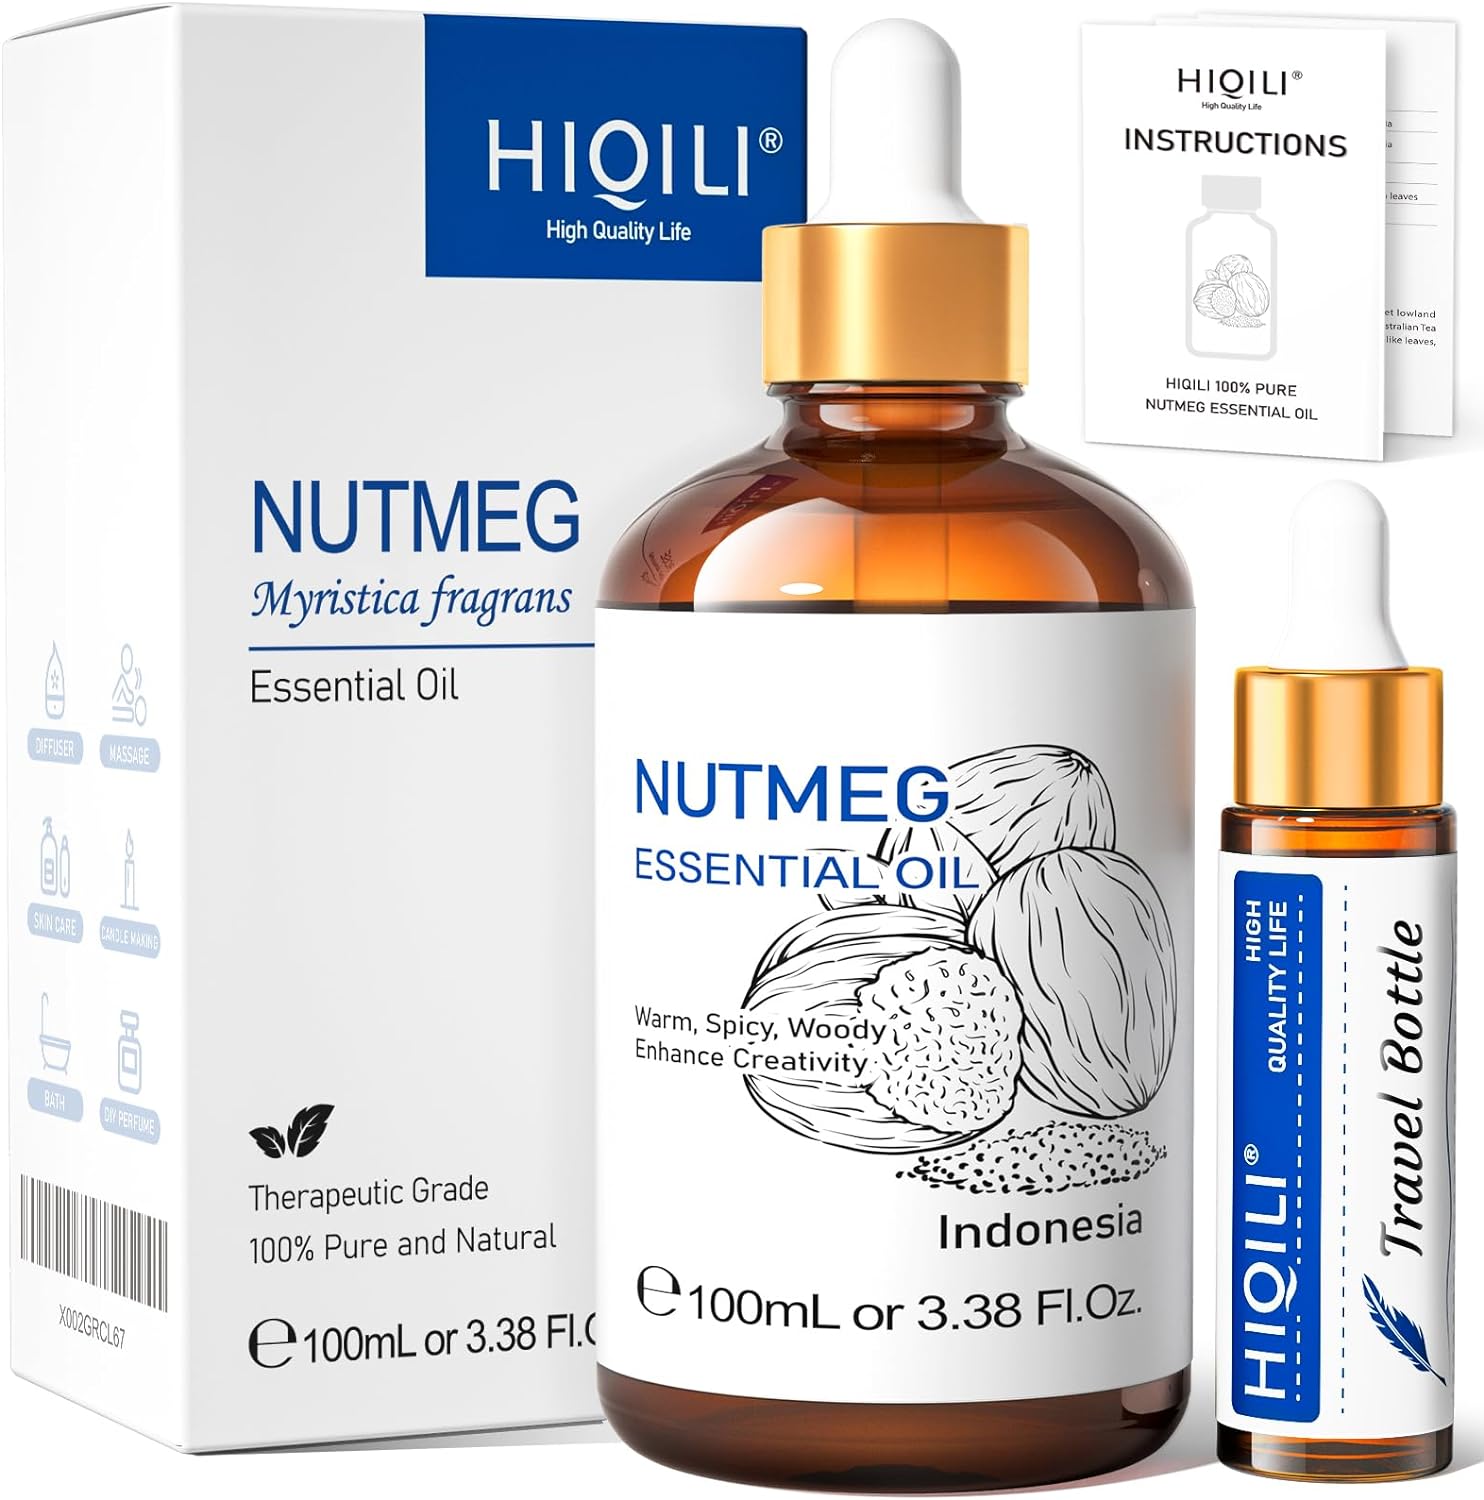 HIQILI Nutmeg Essential Oil 3.38 Fl Oz, Pure Natural Nutmeg Oil for Aromatherapy, Diffuser - 100ml